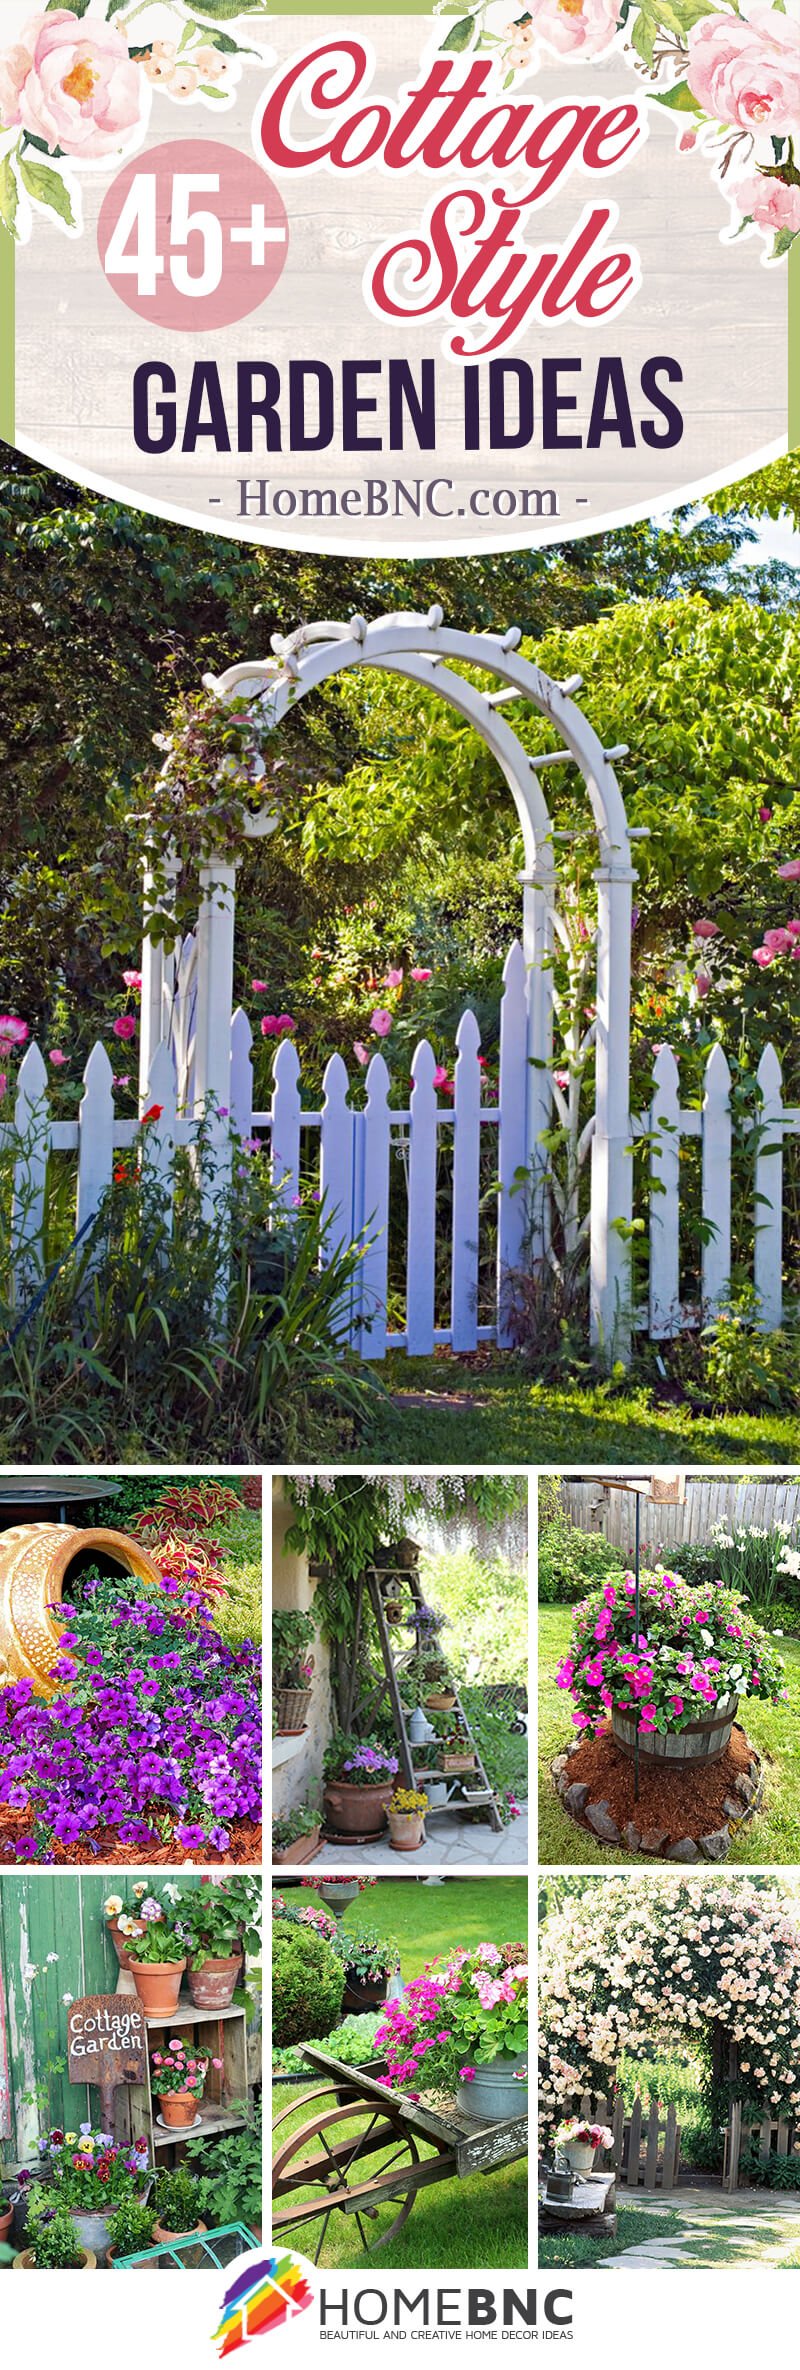 Cottage Style Garden Ideas